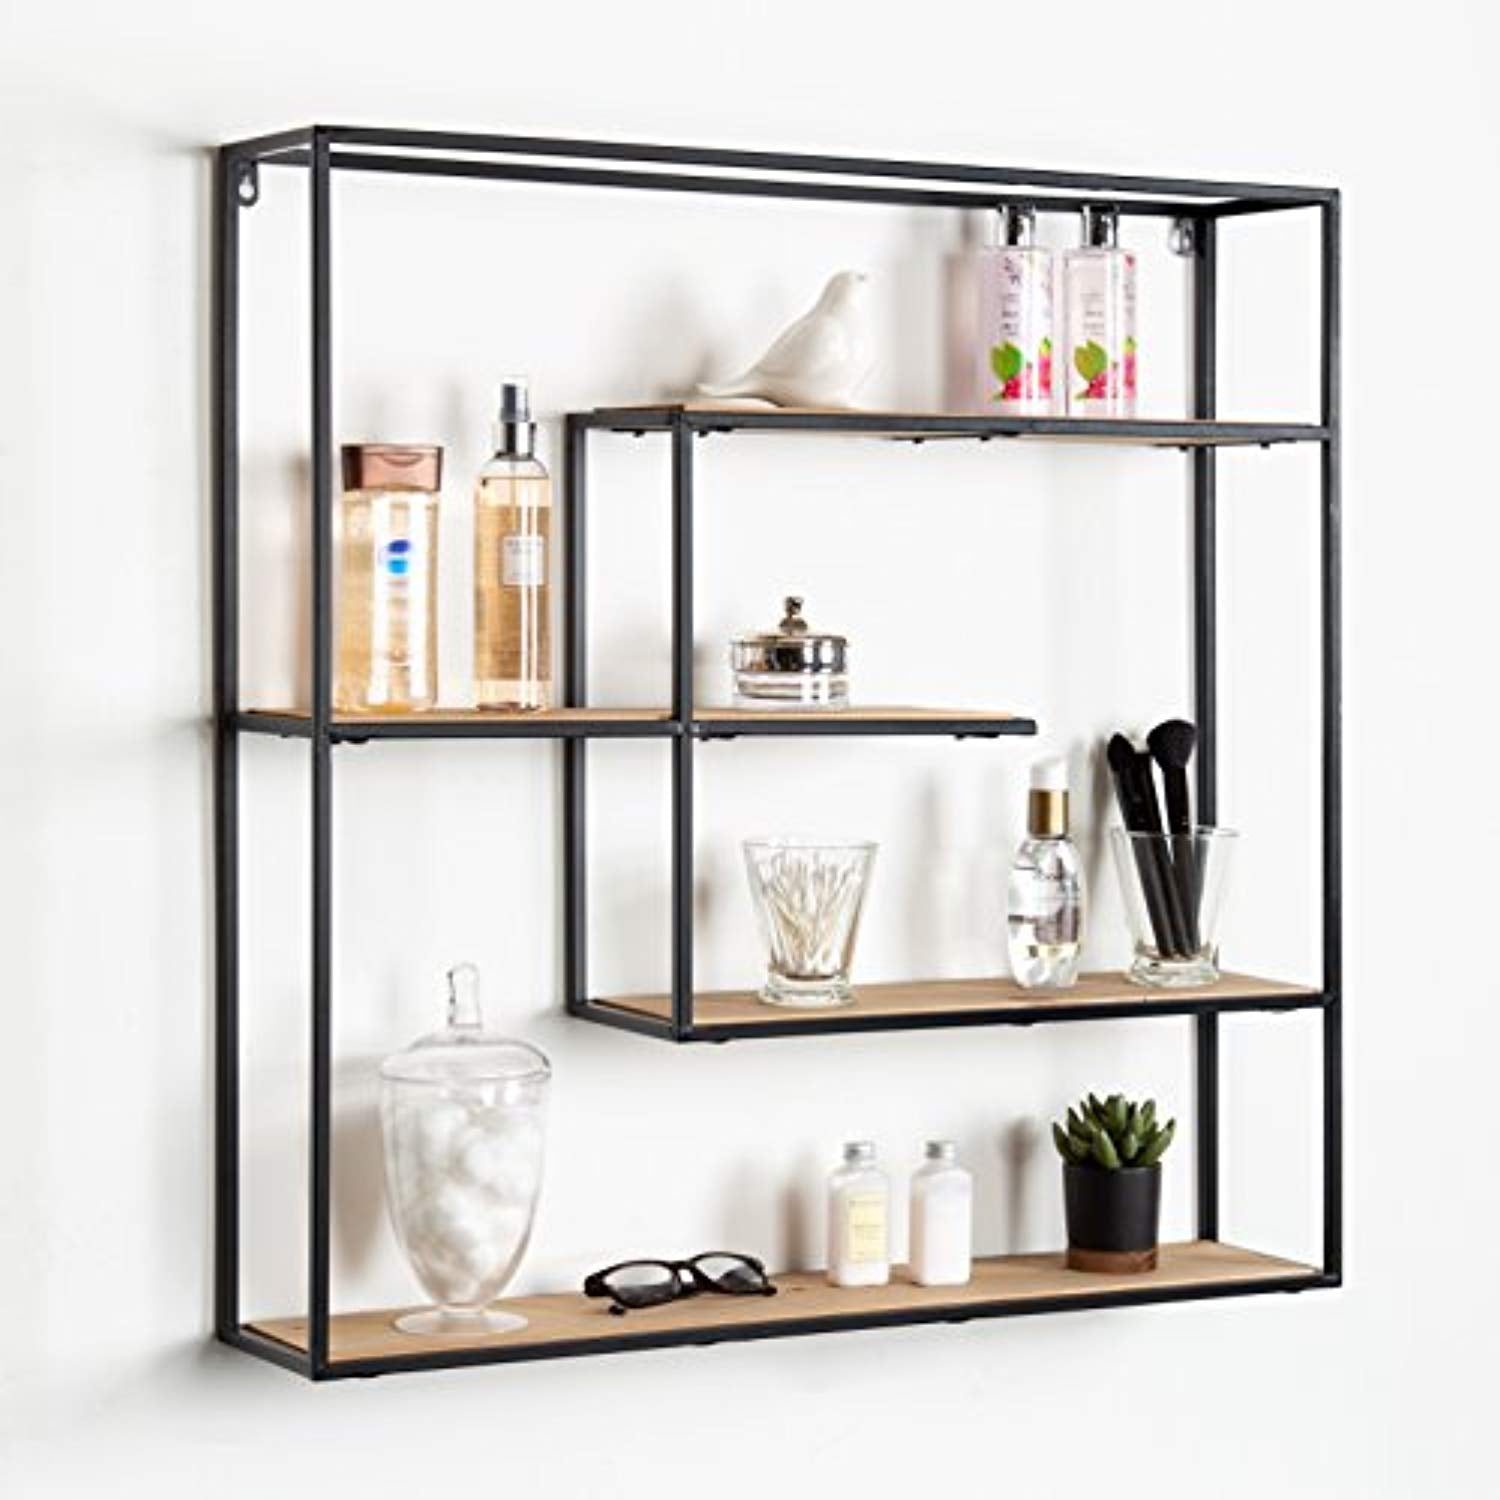 Featured image of post Modern Metal Wall Shelves / Stratton home decor set of 2 modern wall shelf.